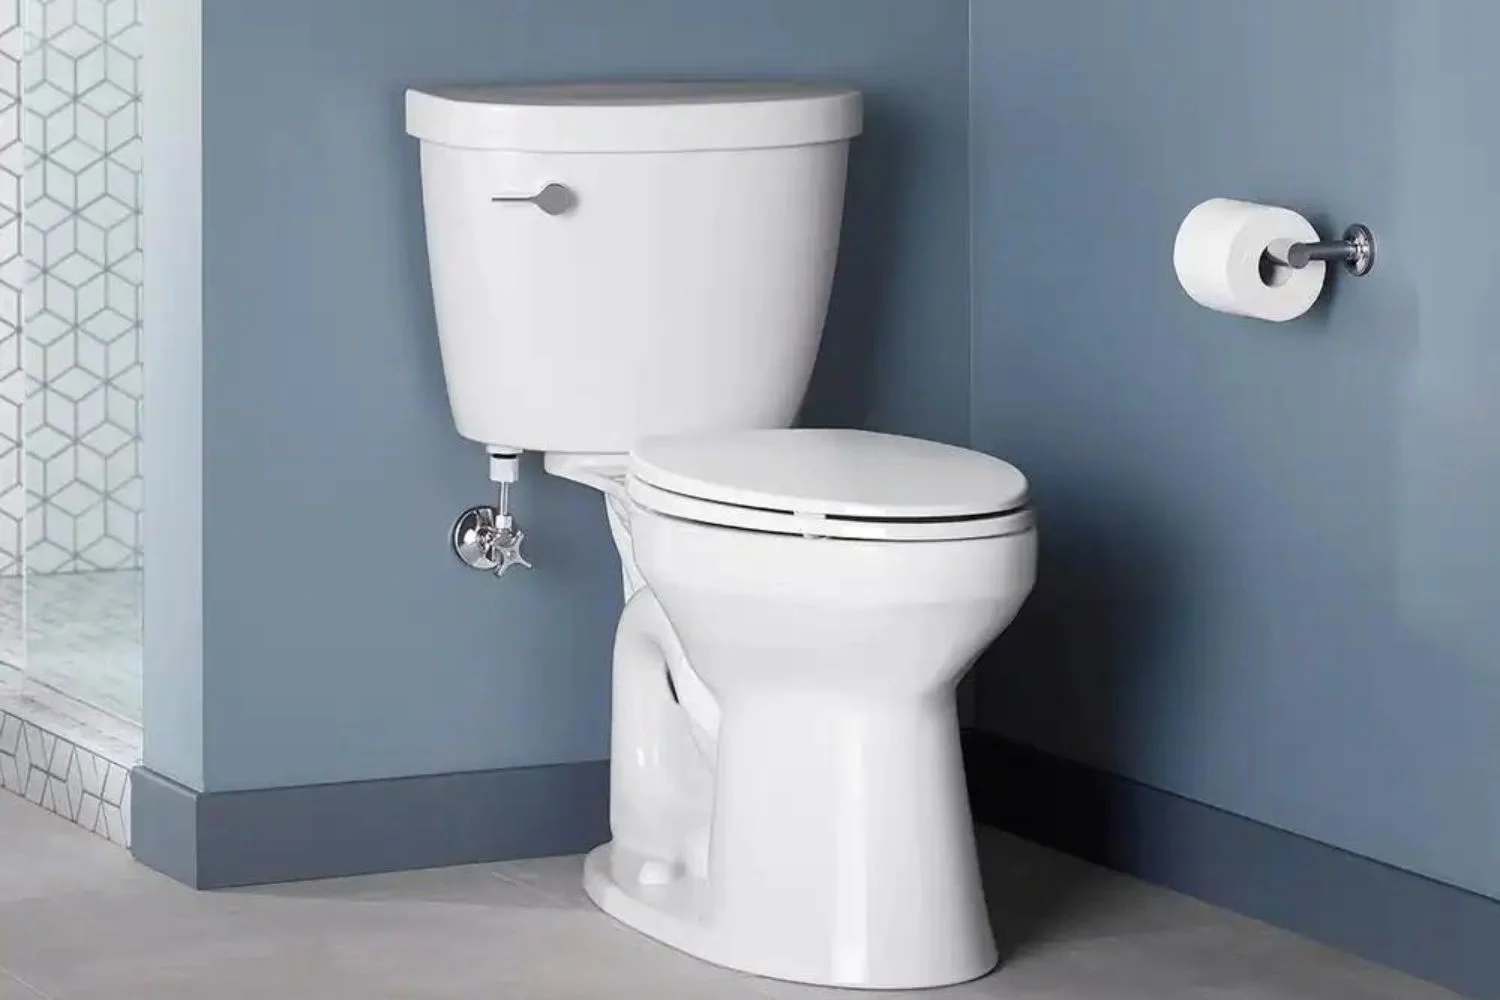 How To Adjust Water Level In Kohler Toilet Bowl